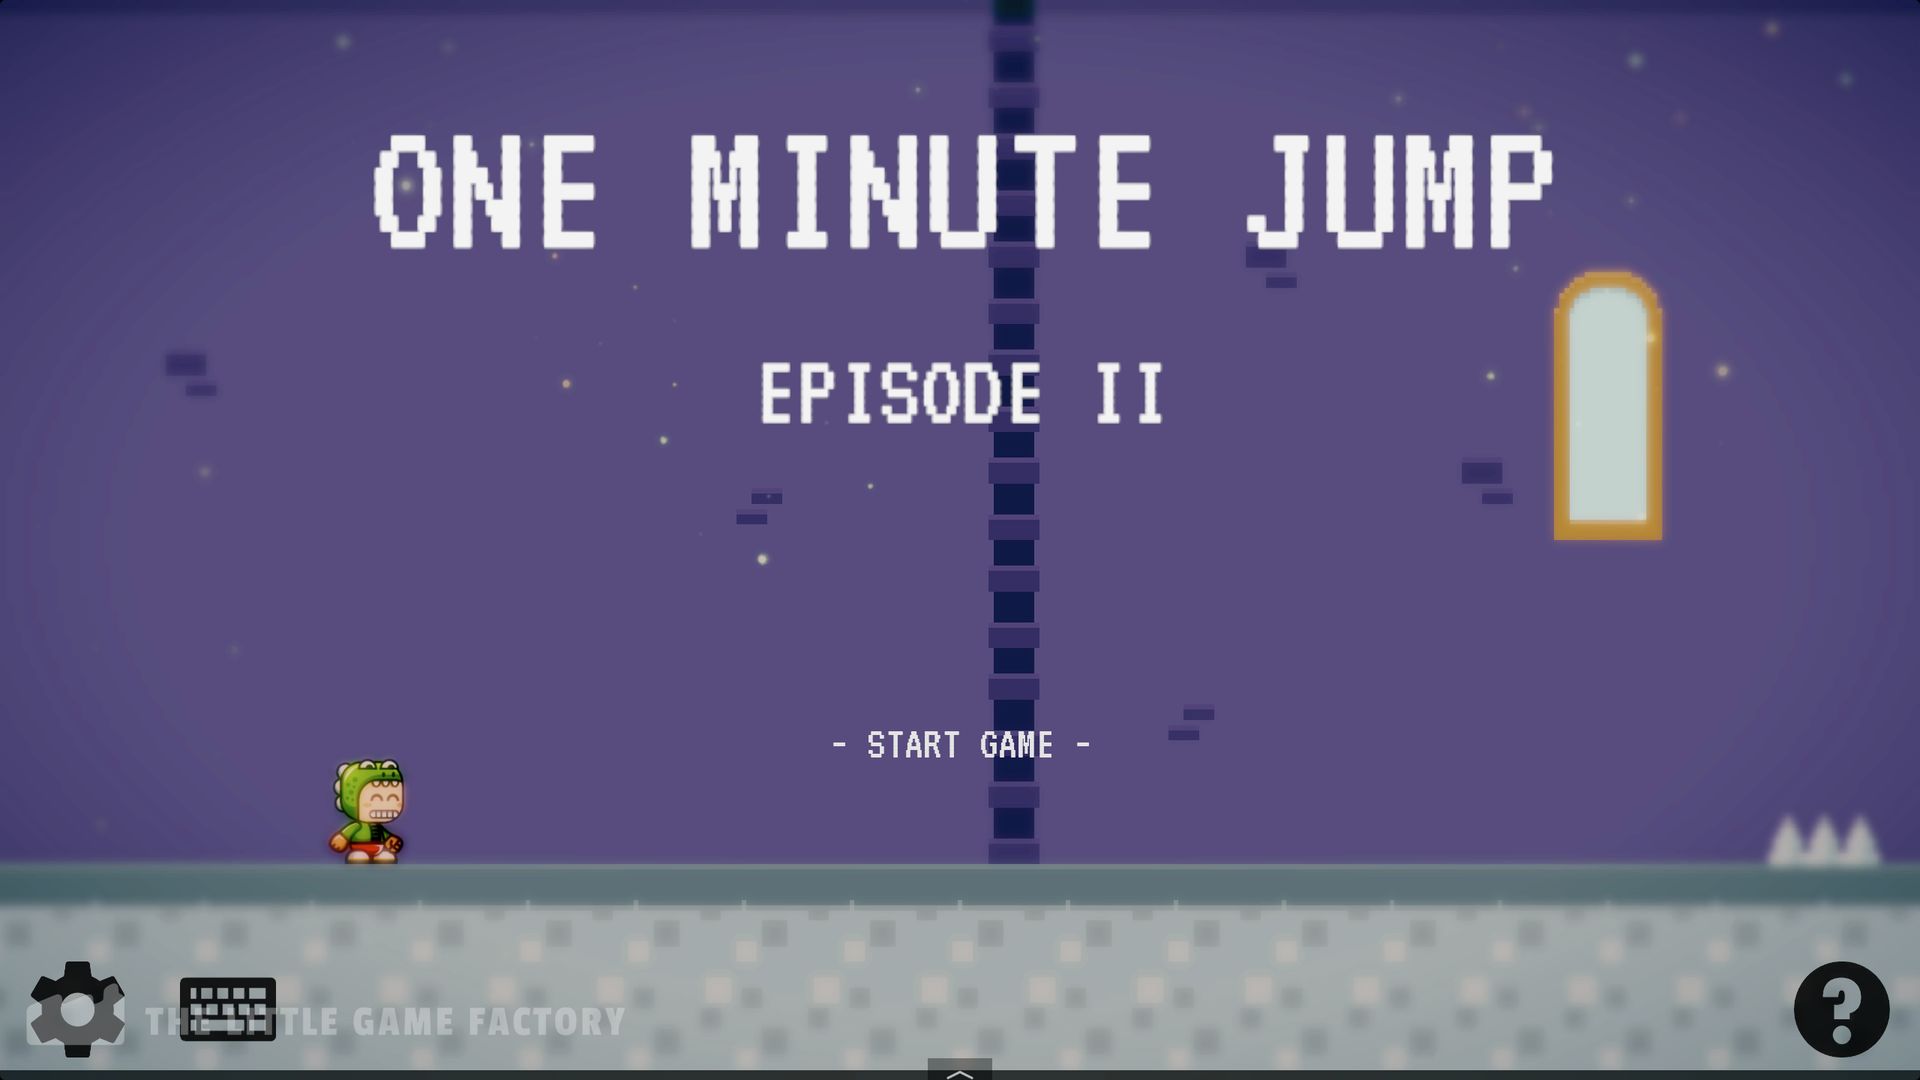 One Minute Jump Episode II Screenshot 1 | Unity WebGL game | Play WebGL games on thelittlegamefactory.com and supergoodgames.com